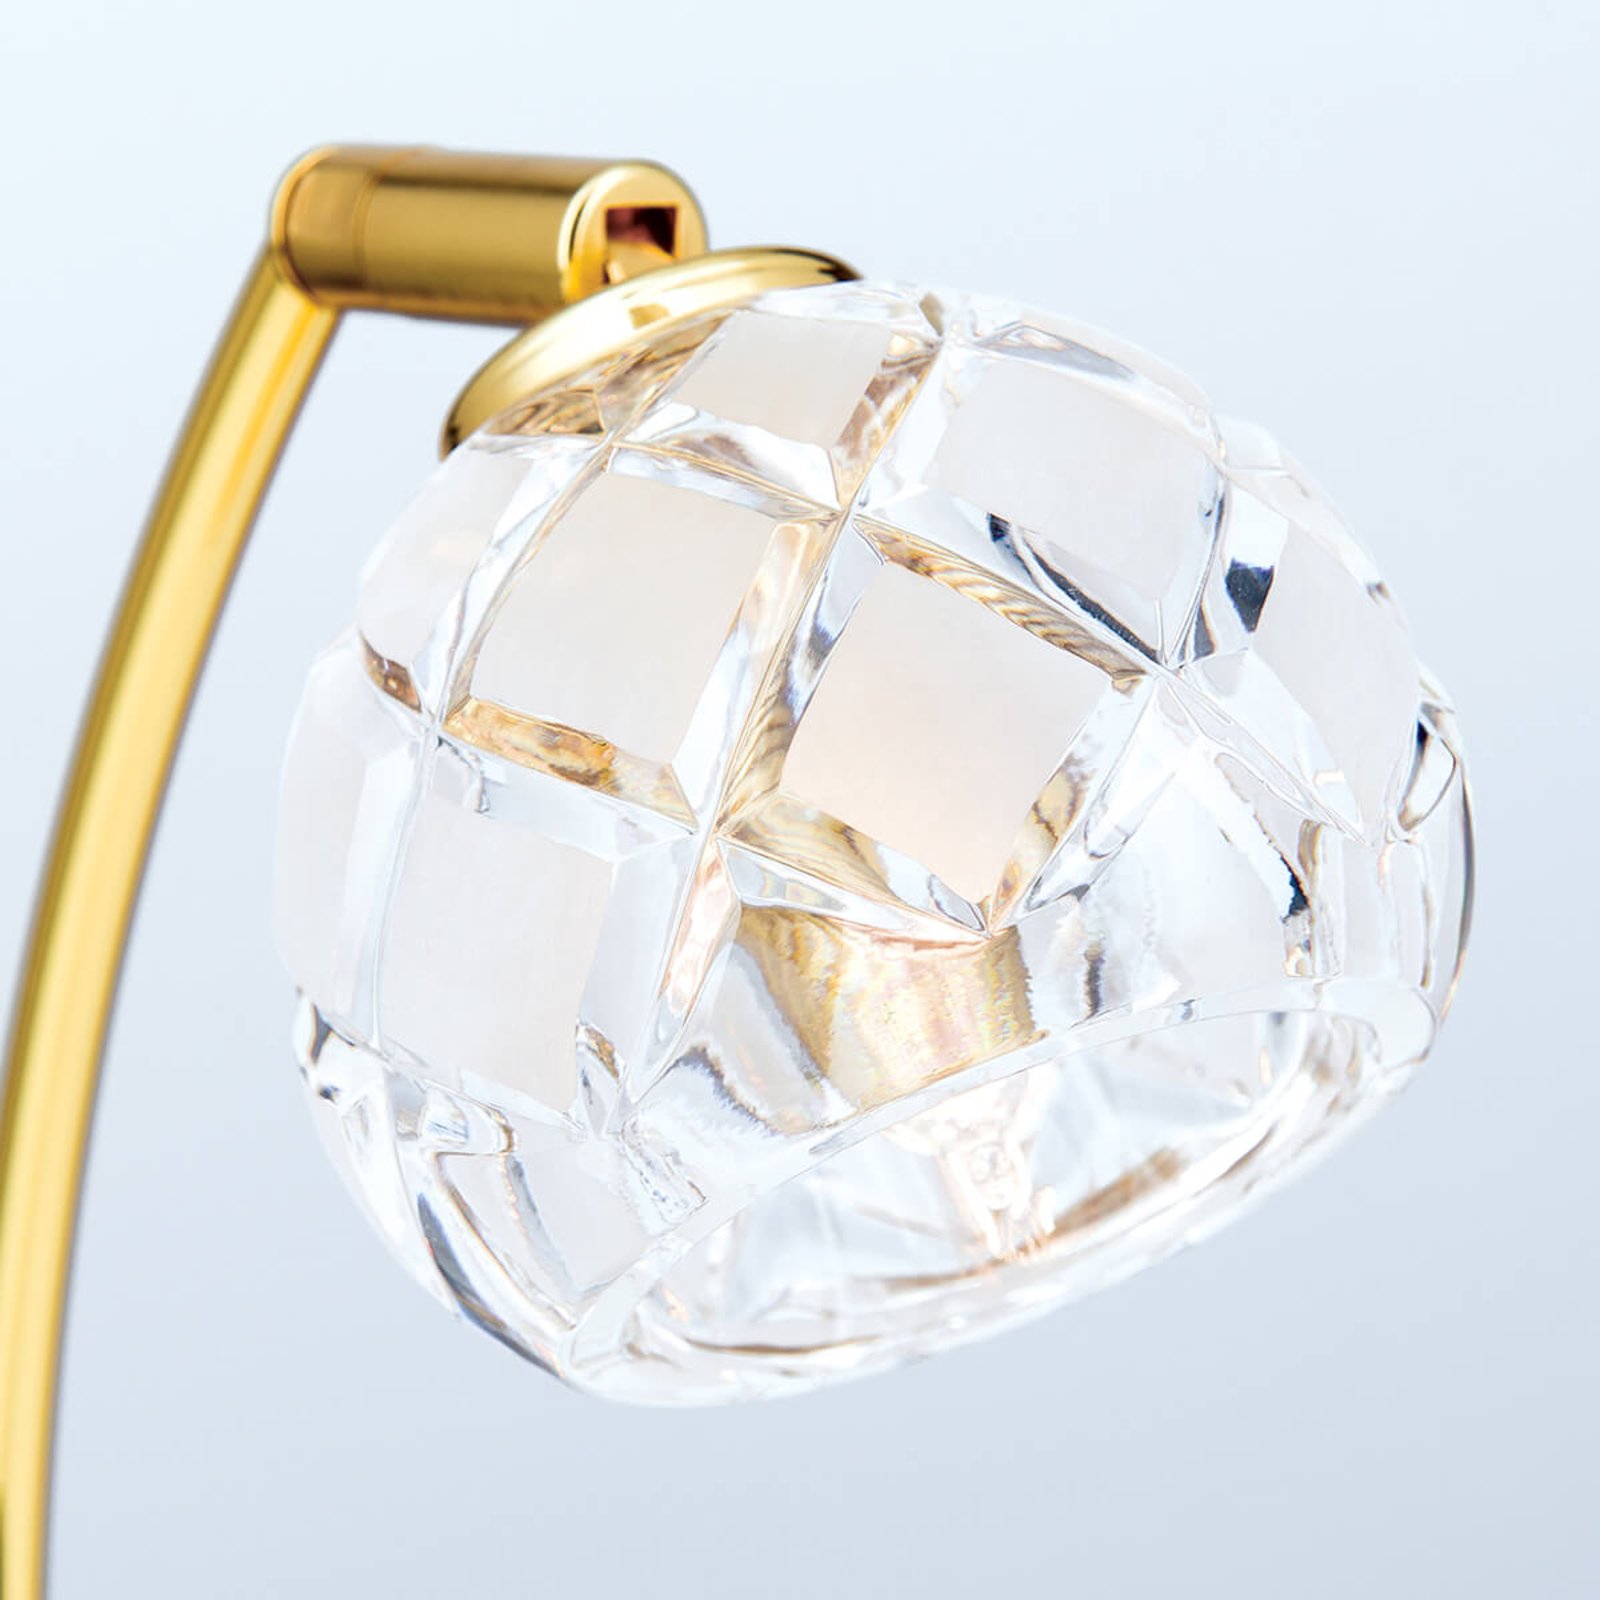 Loodkristal-tafellamp Maderno, goud